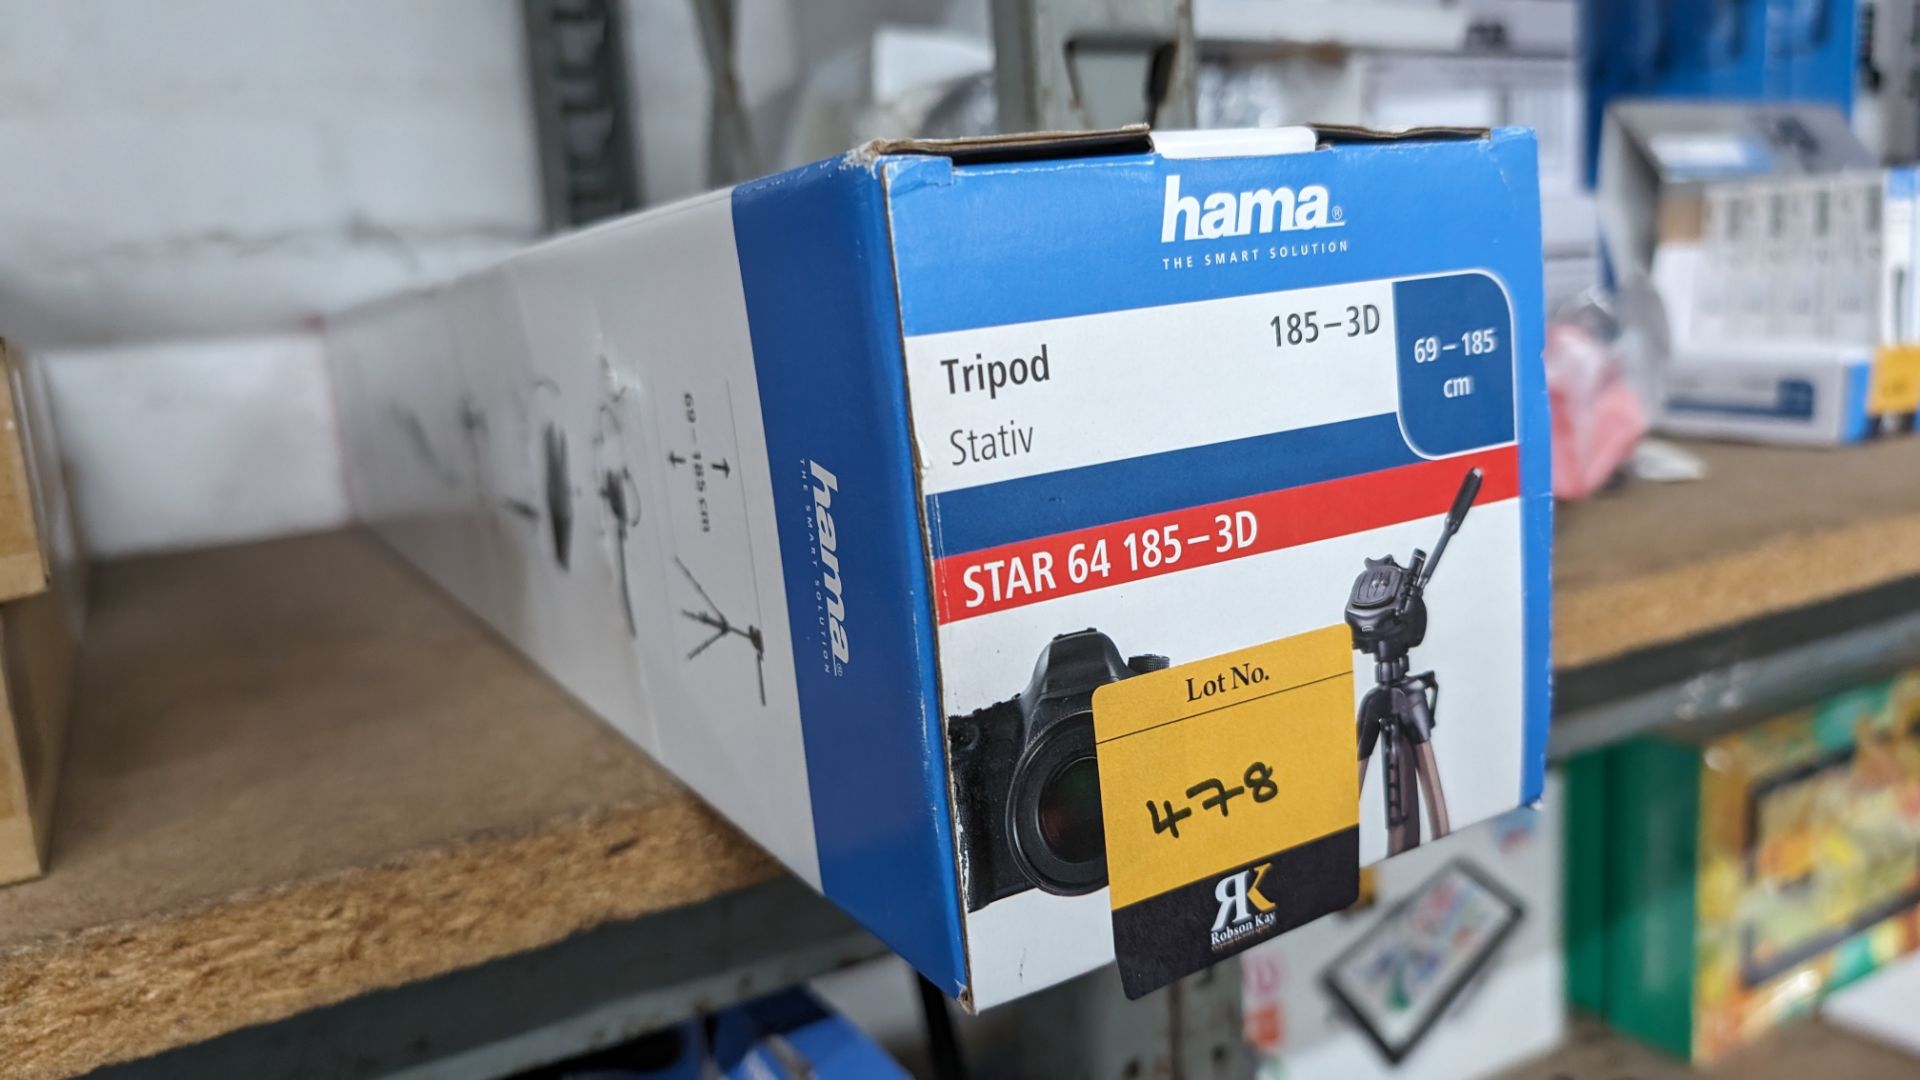 Hama tripod model Star64 185-3 D, 69-195cm